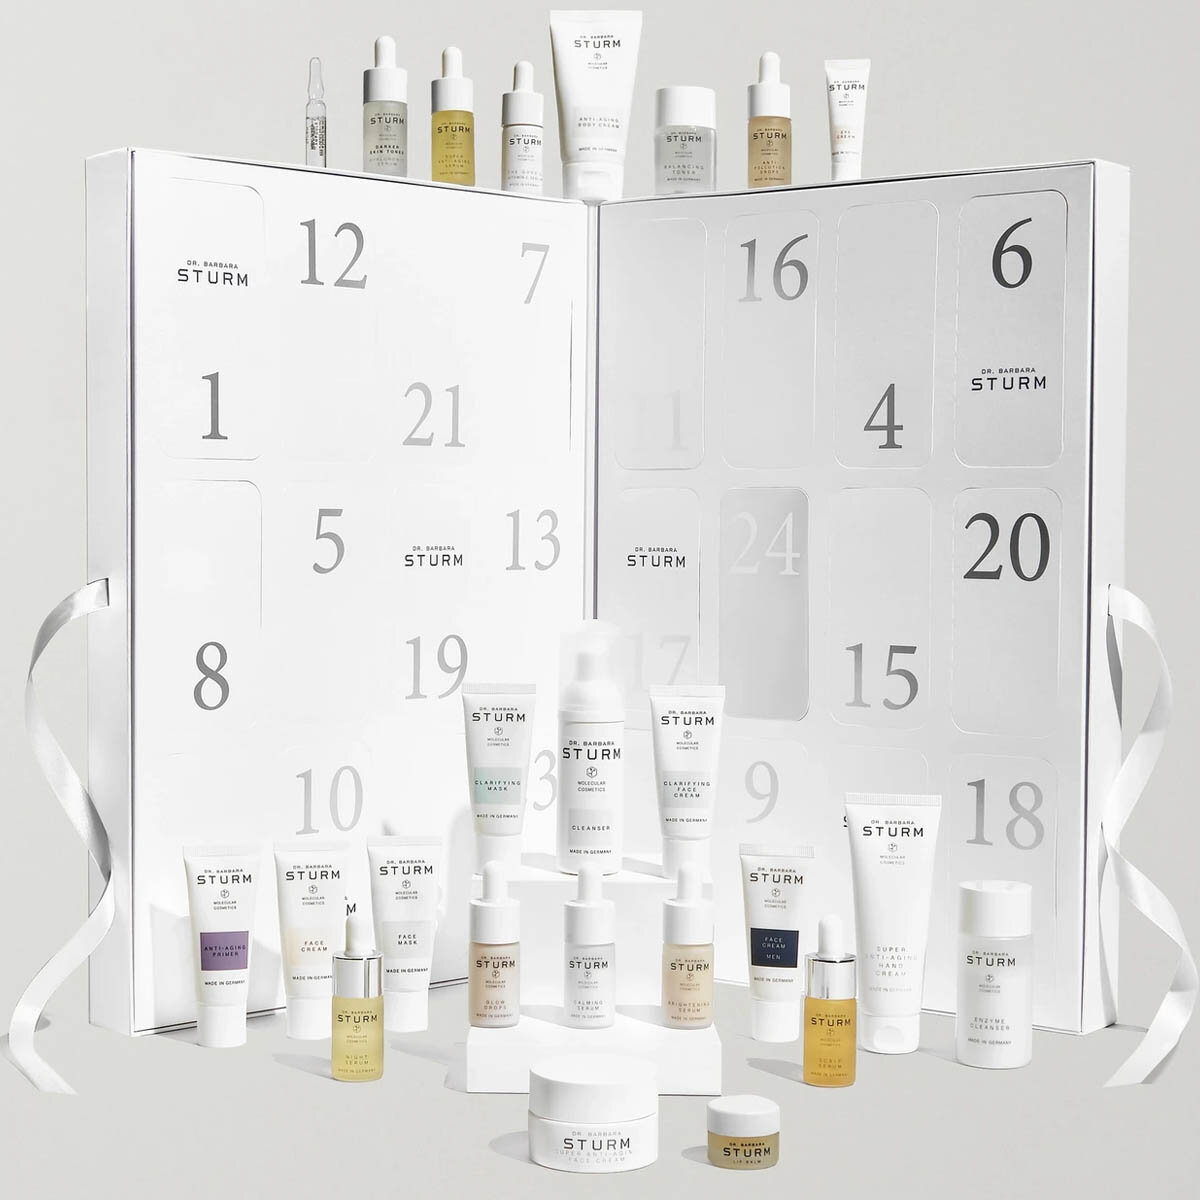 DR BARBARA STURM Adventskalender 2021 Inhalt Beauty Advent Calendar Skincare Contents